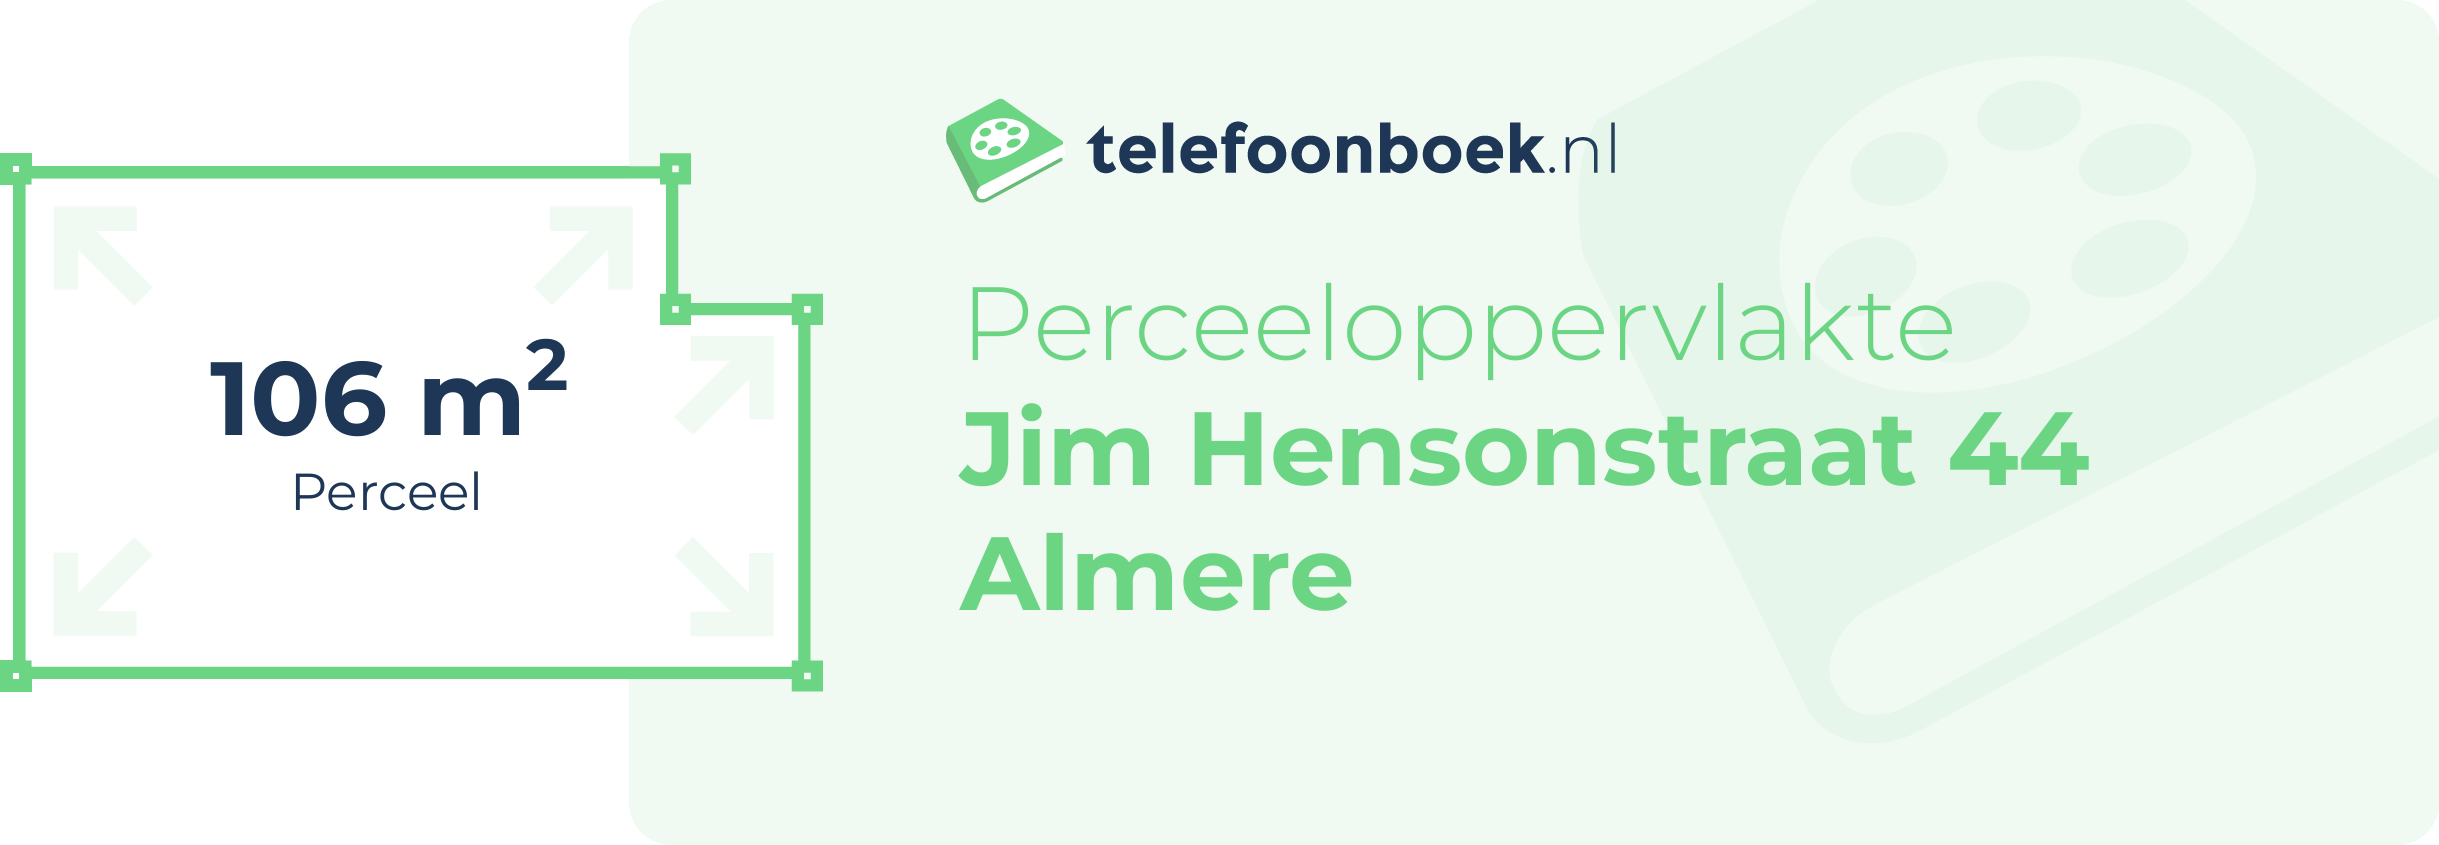 Perceeloppervlakte Jim Hensonstraat 44 Almere